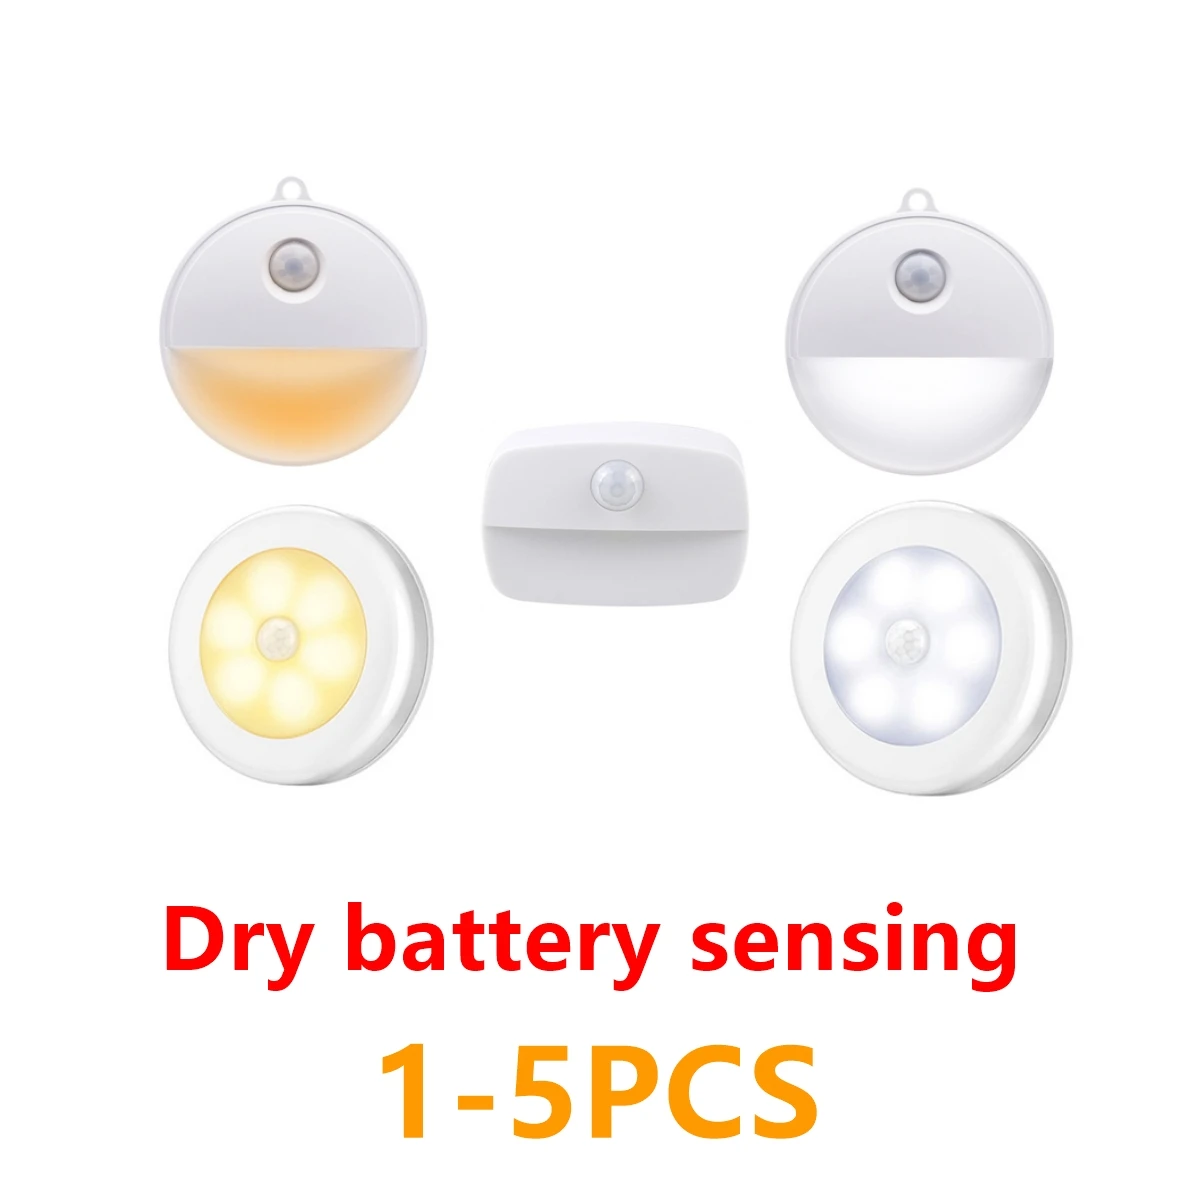 

LED wireless intelligent night light human sensing light sensing 0.5W 4.5V dry battery for hallway mirror headlights